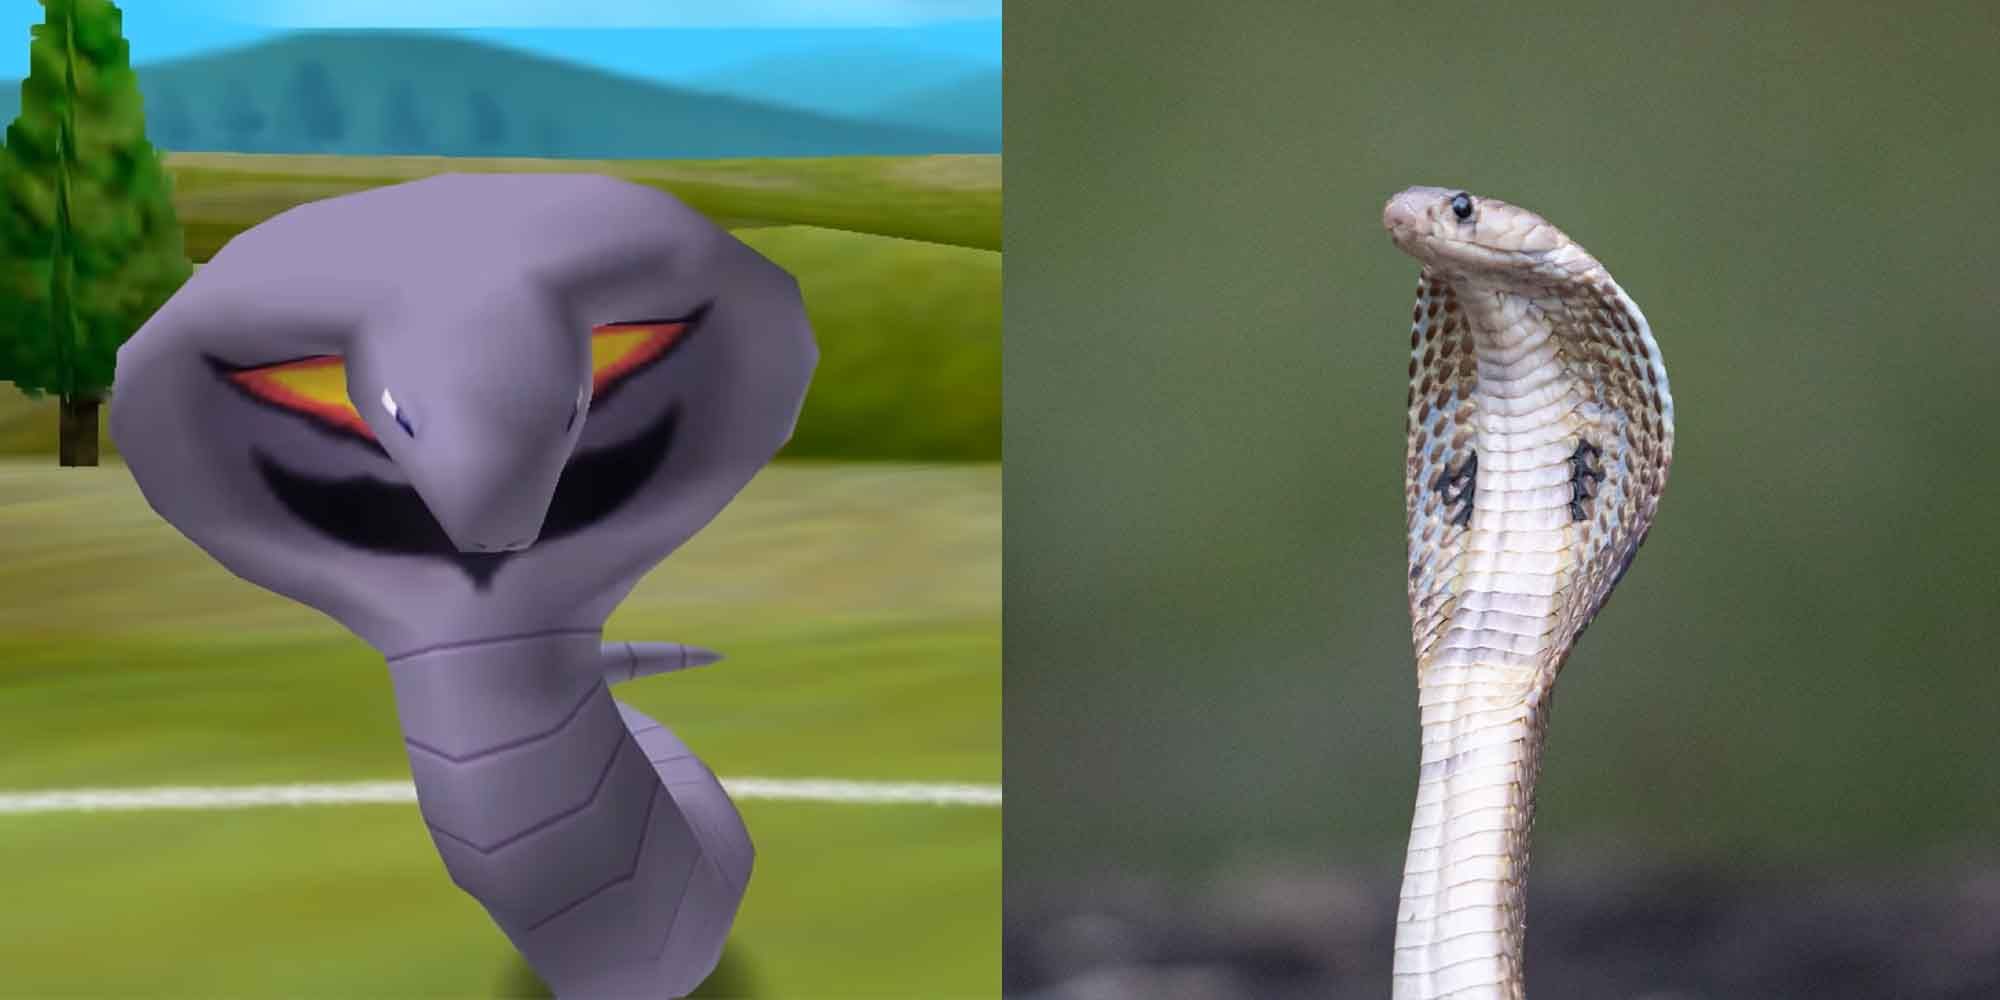 Arbok Pokemon and a Cobra